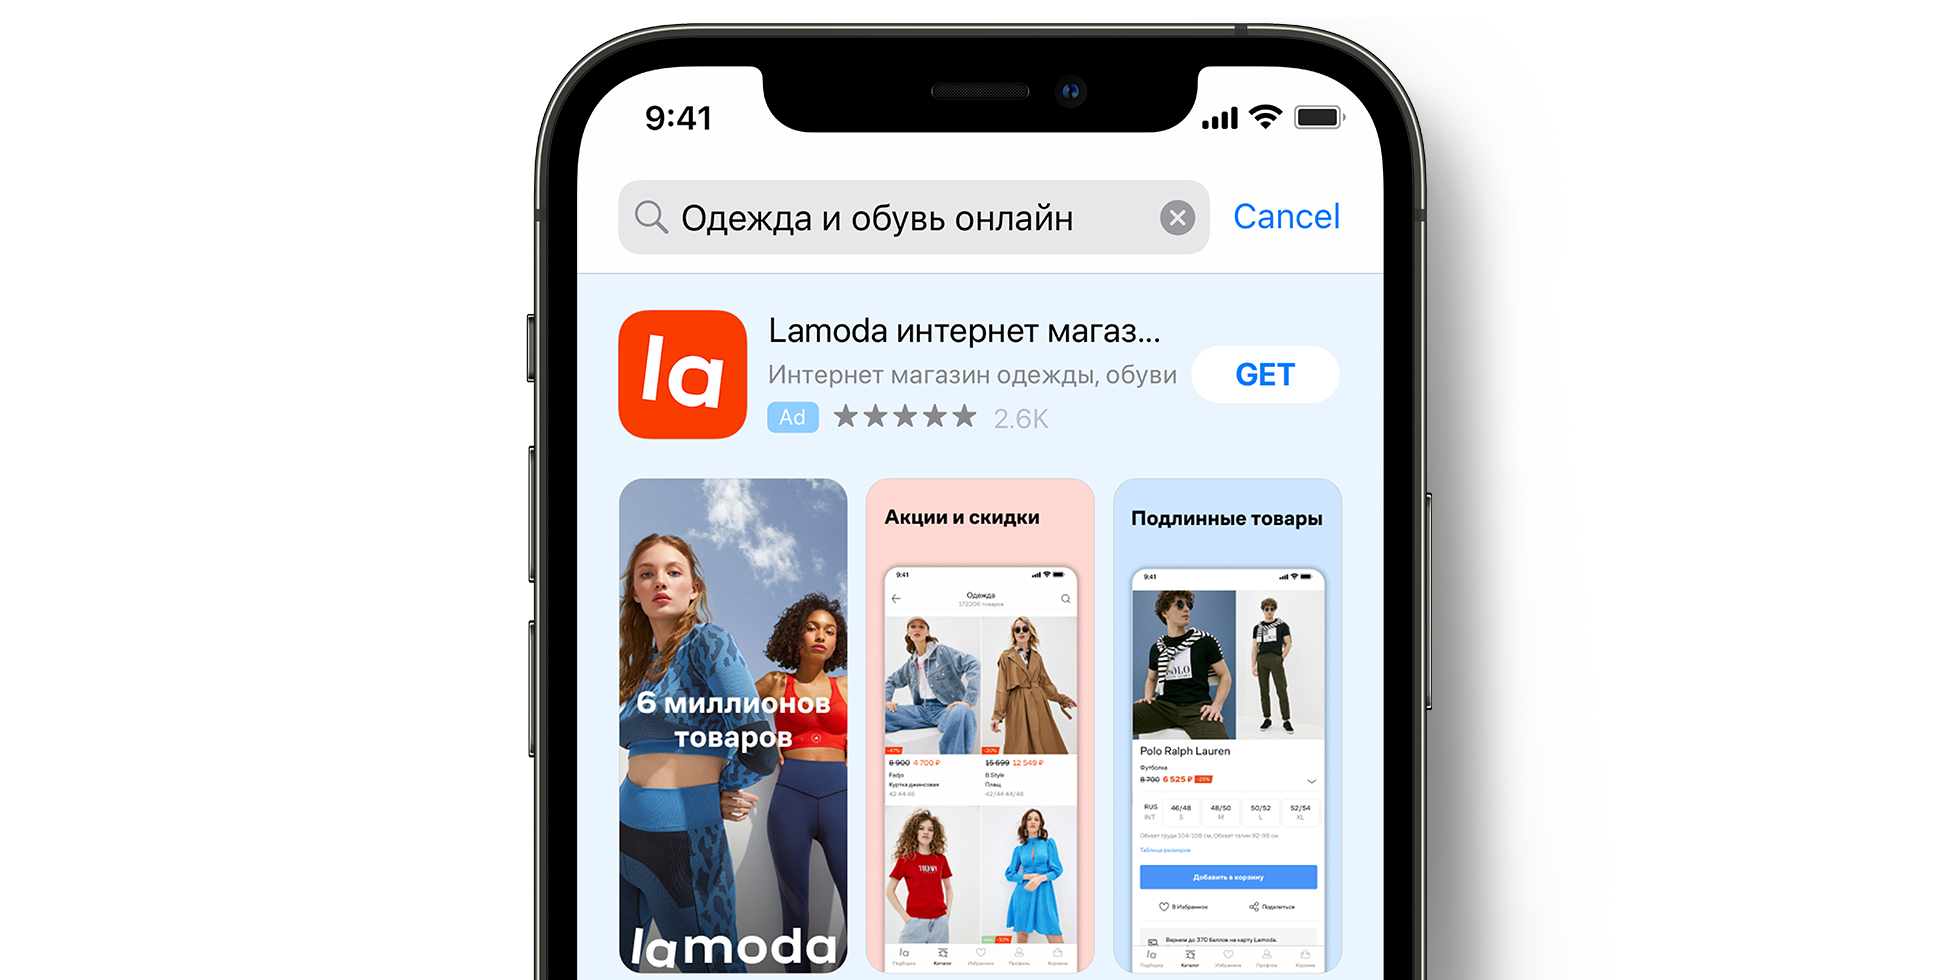 Lamoda ad on the App Store